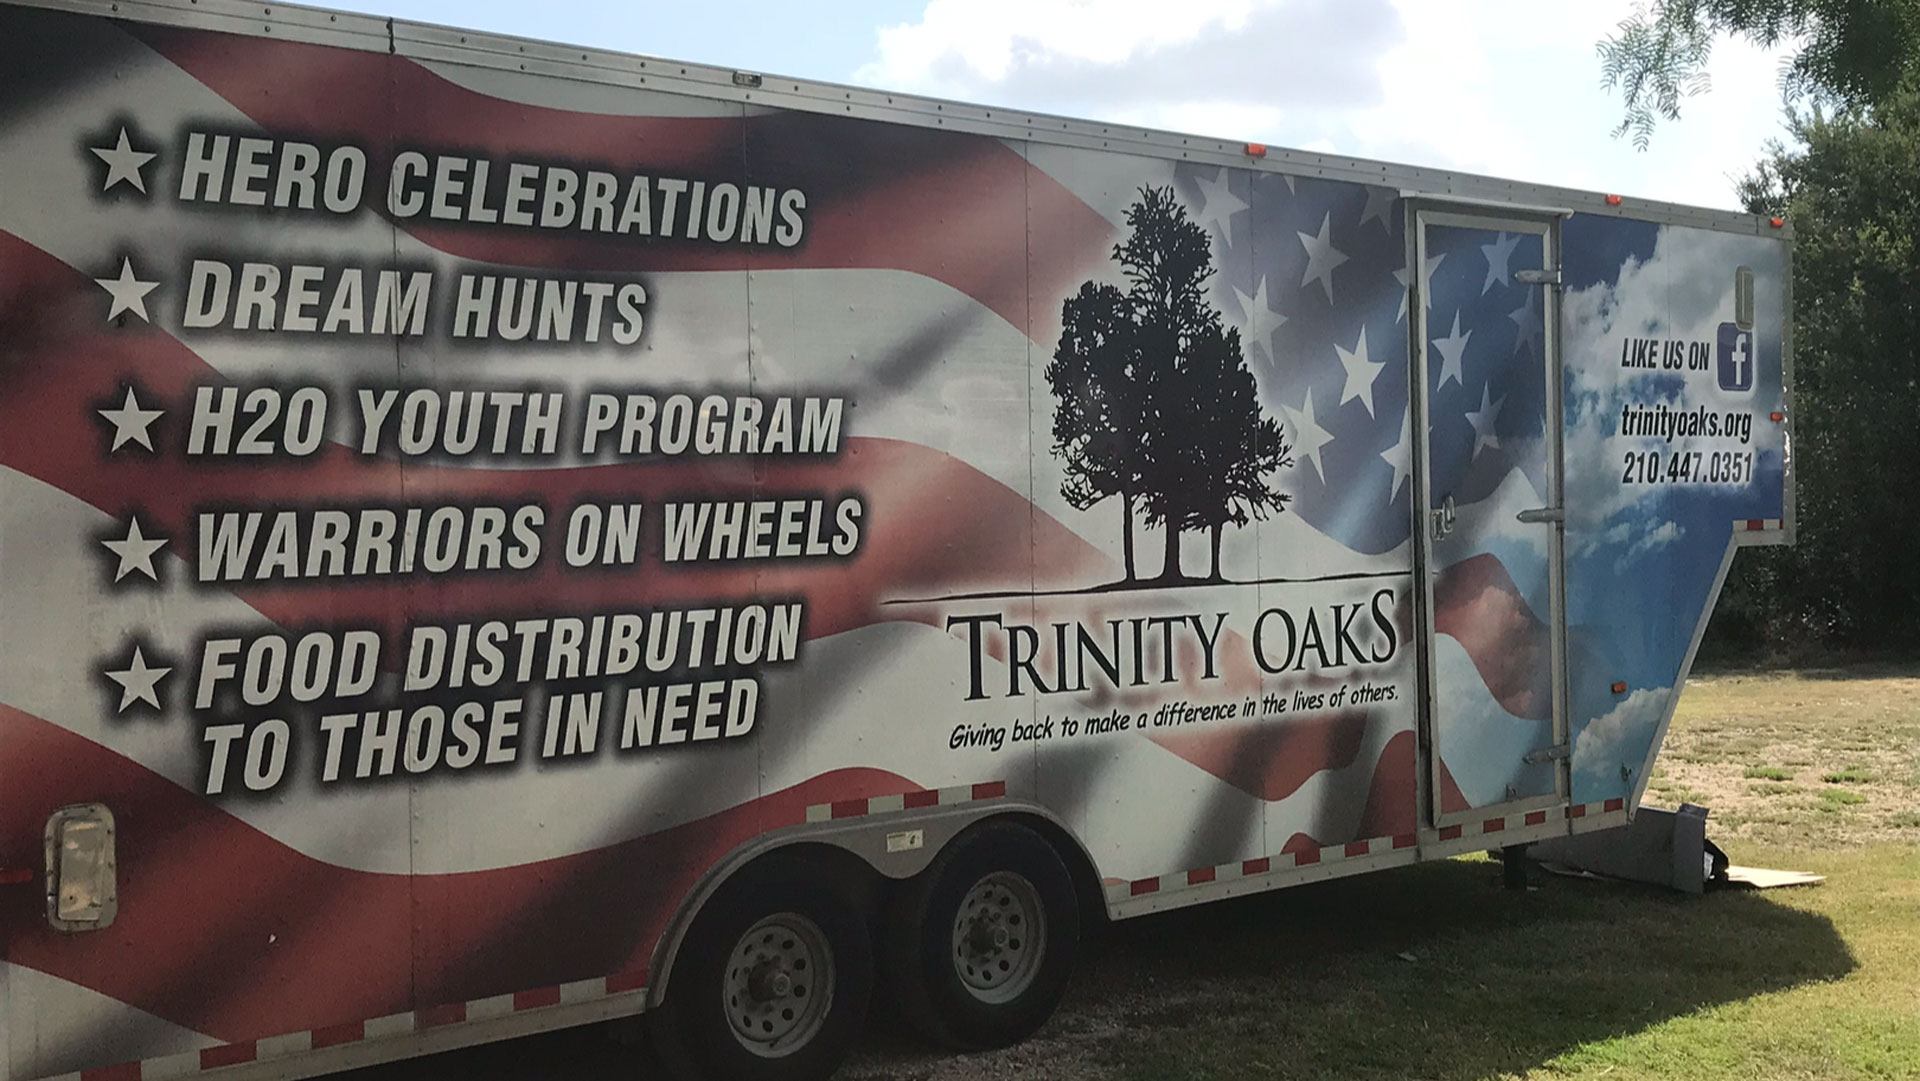 Trinity Oaks events trailer